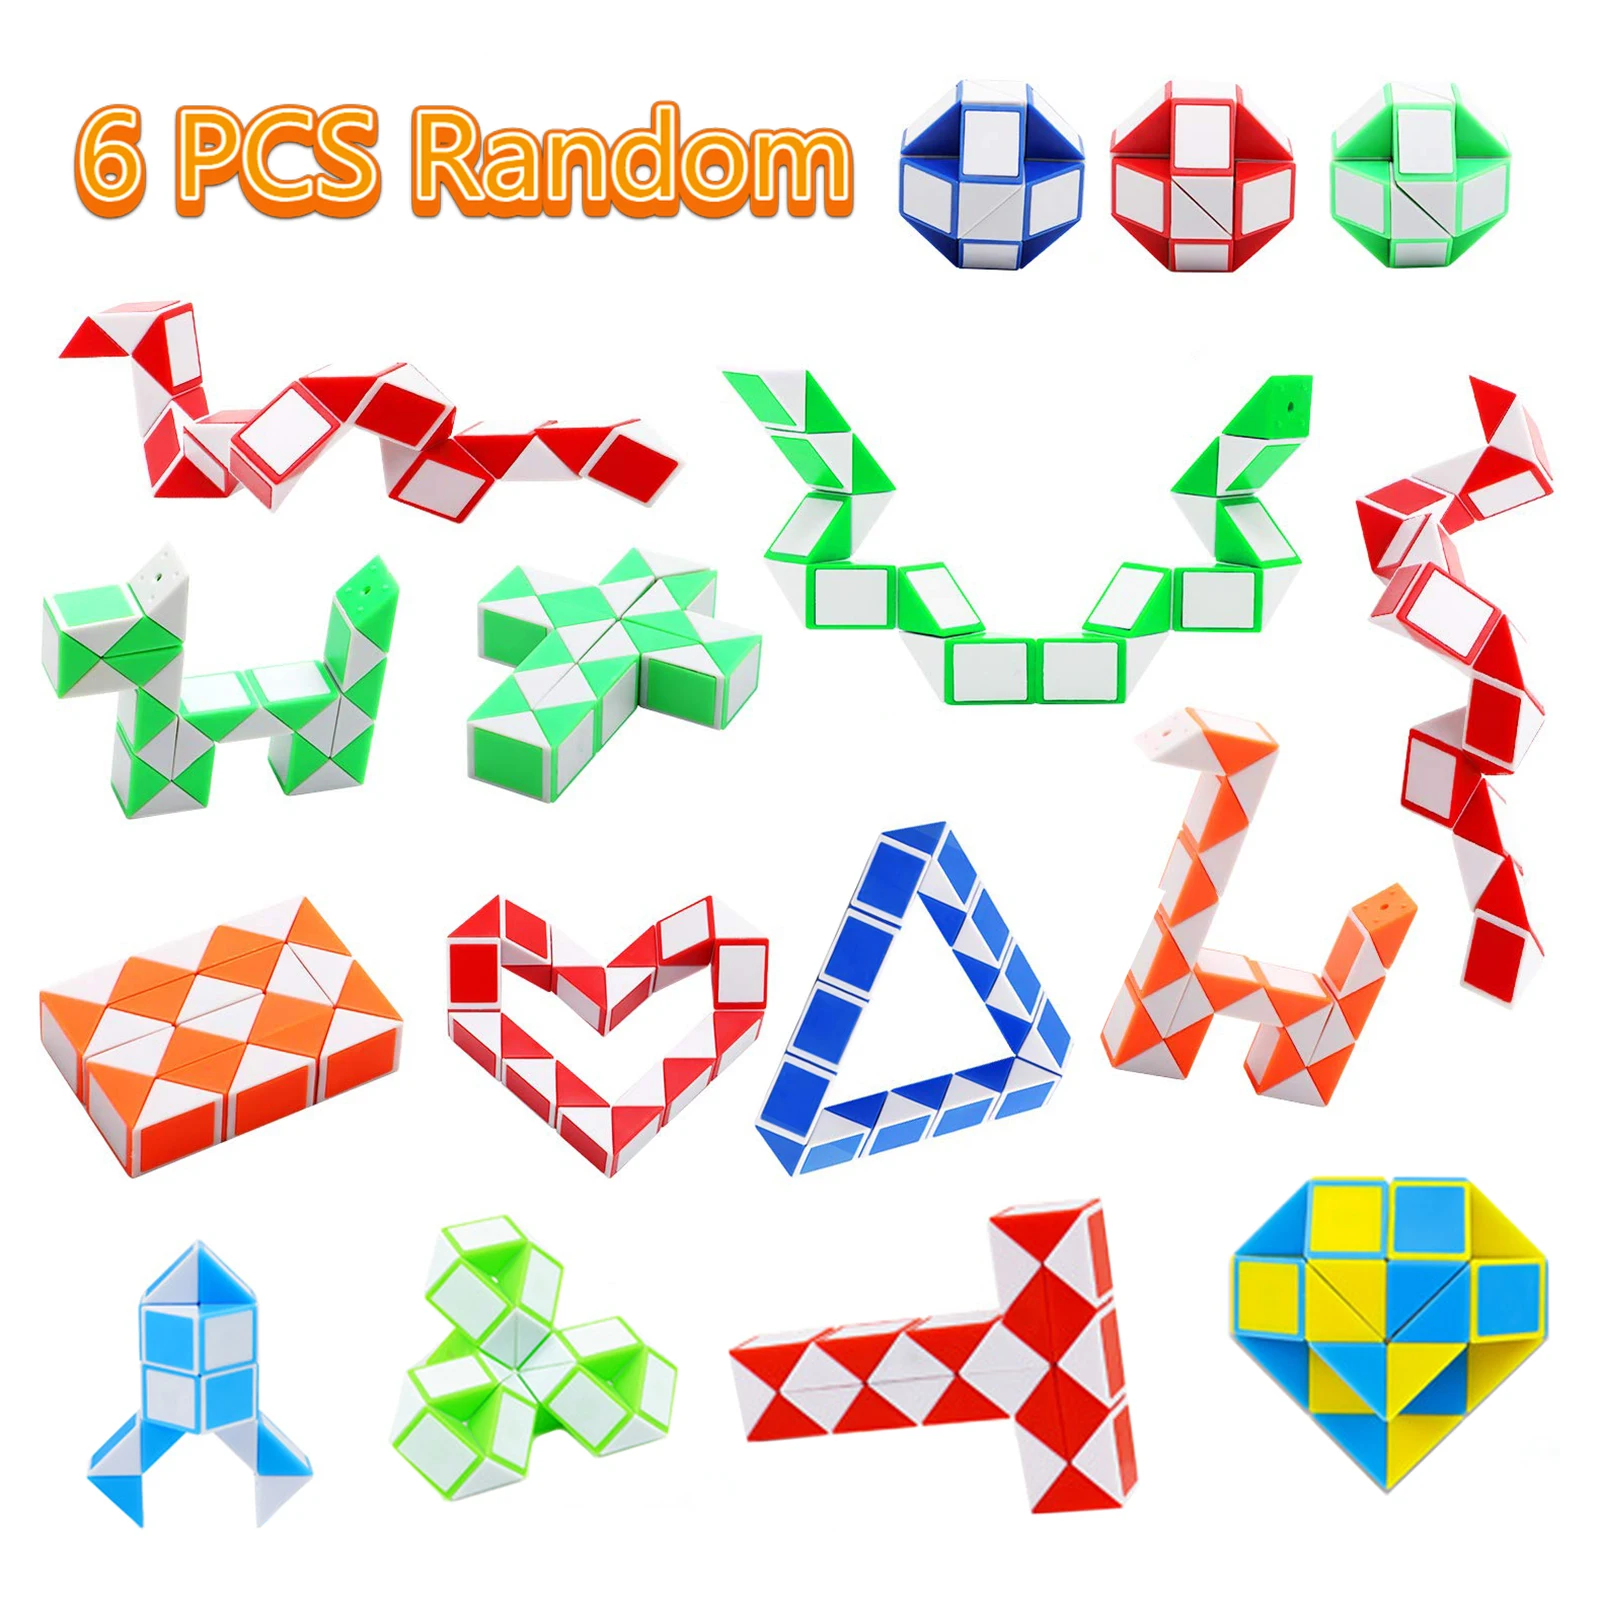 

6pcs Random Snake Cube Twist Folding Puzzle Fidget Toy 24 Blocks Magic Ruler Anti Stress Reliever Game Gift for Kids Adults